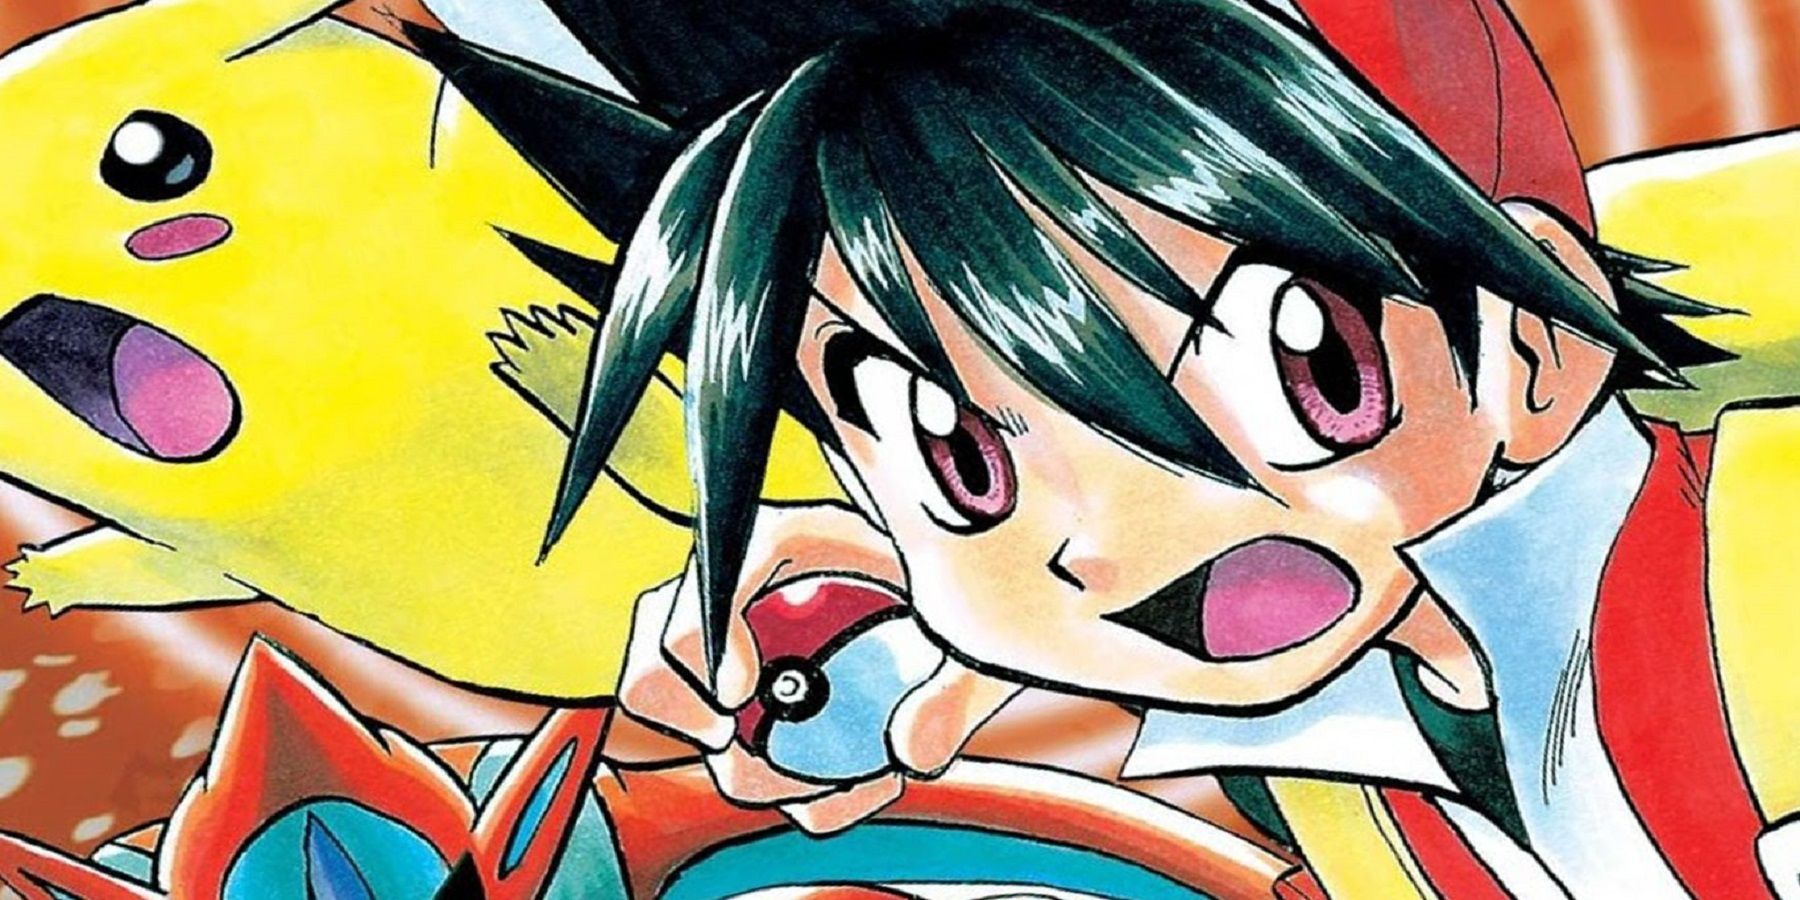 History of Red (Pokemon Adventures Manga)